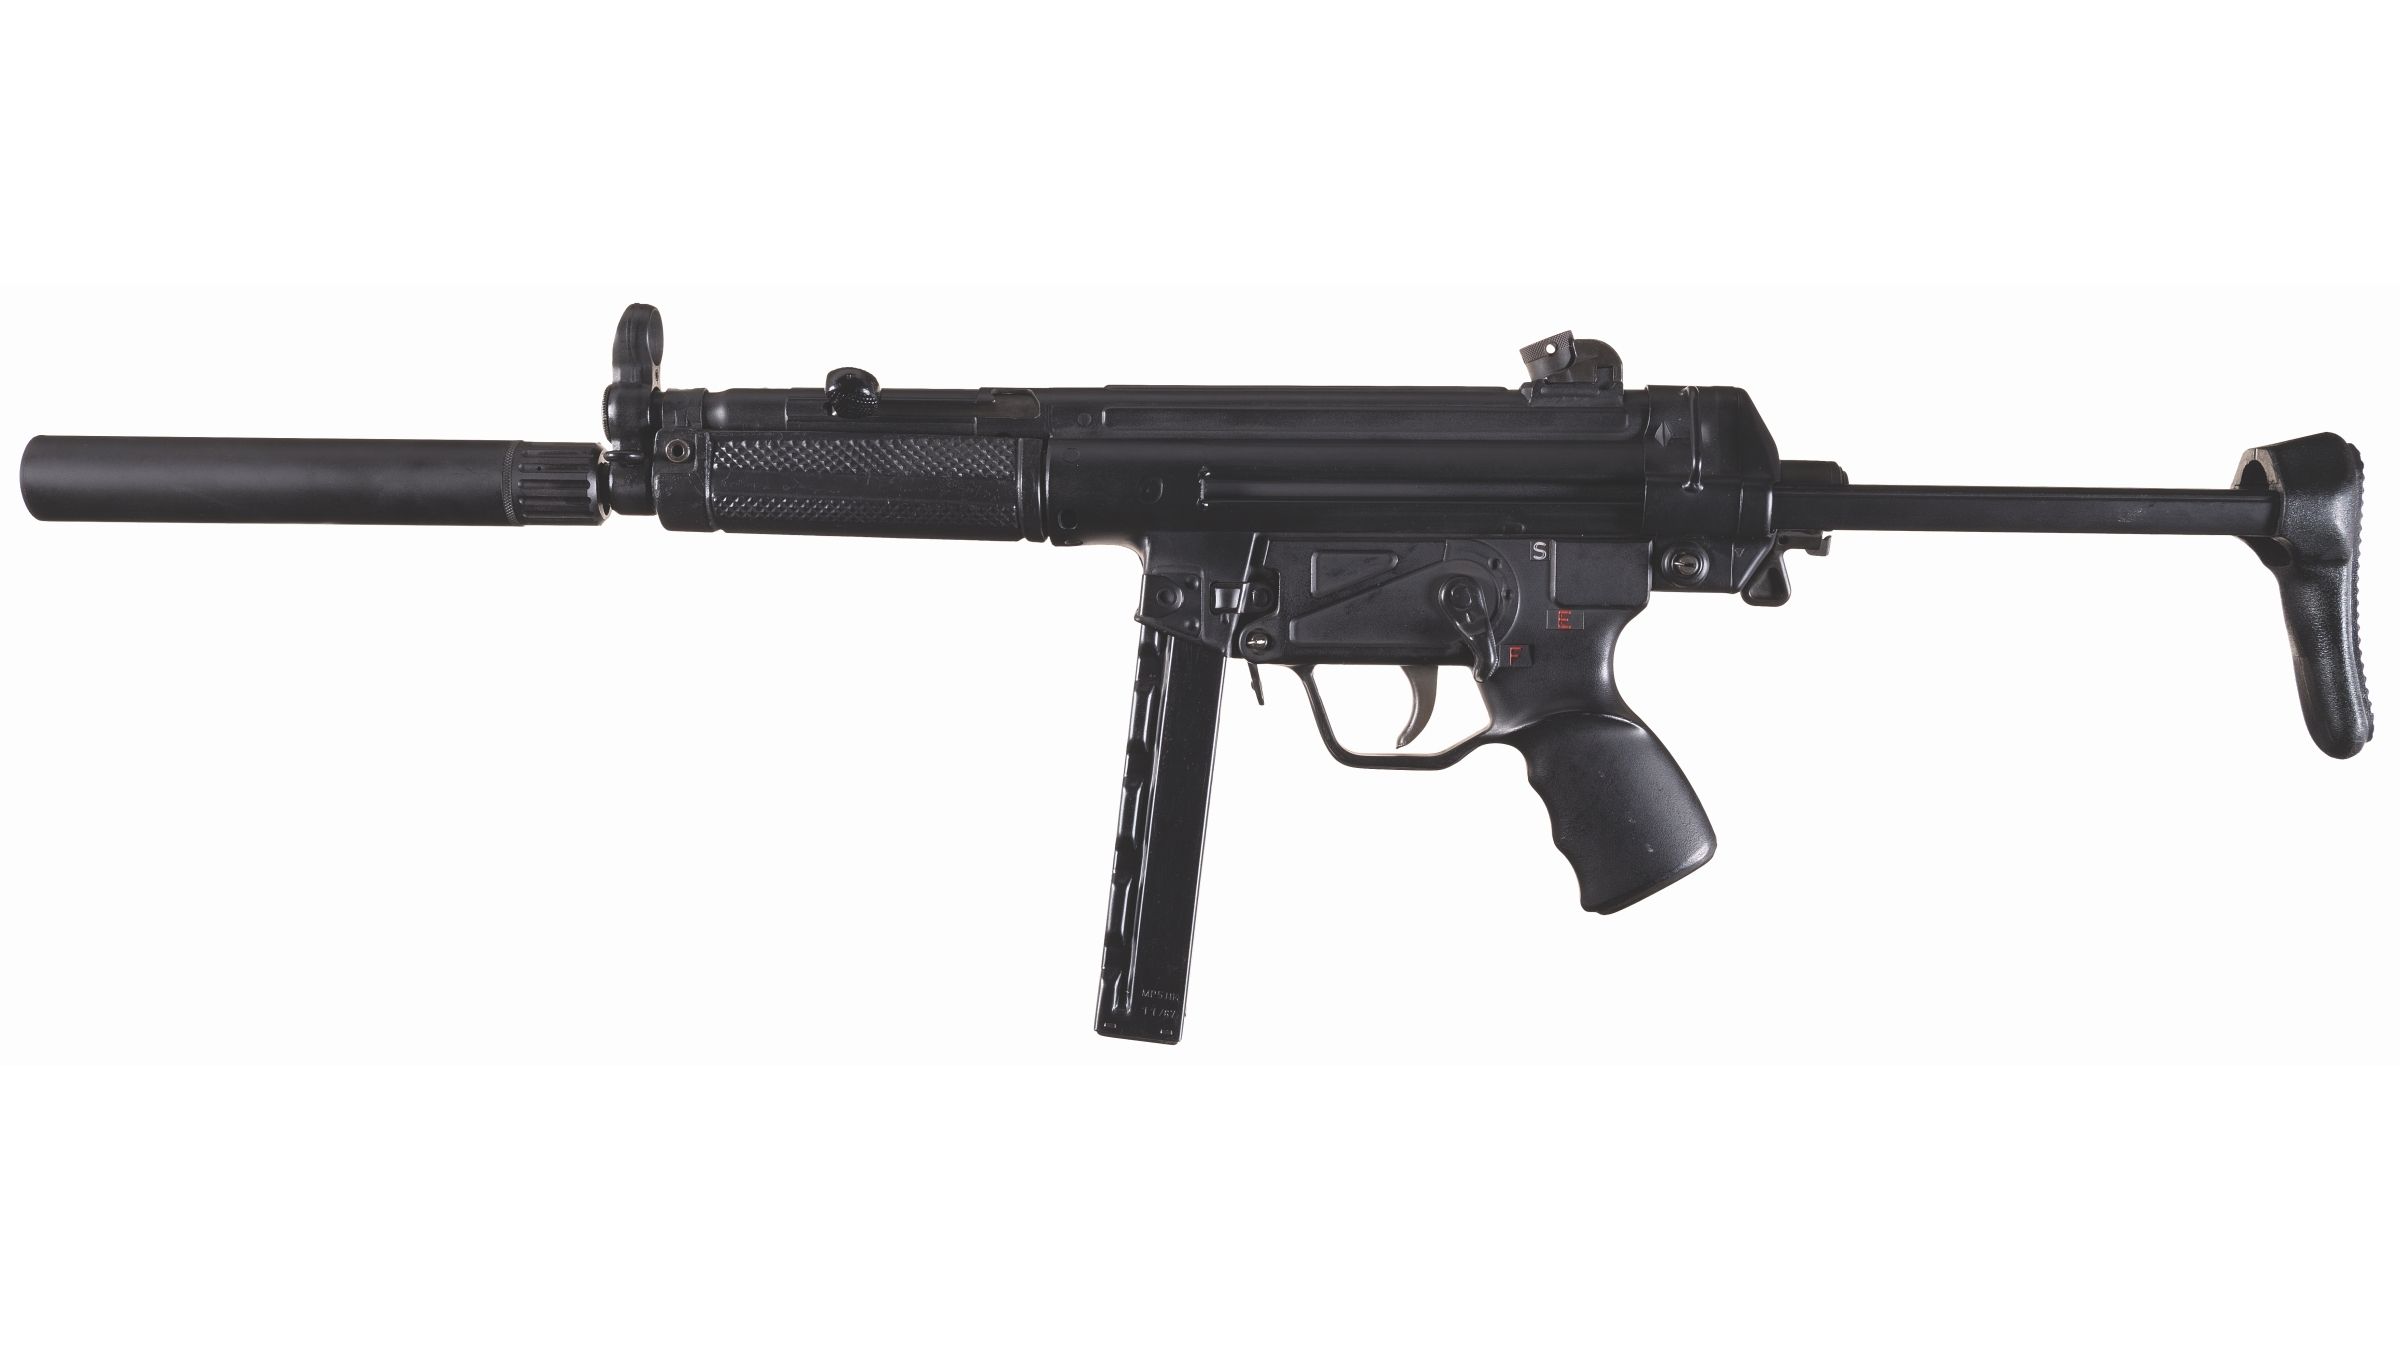 Lot 465: H&K MP5 Submachine Gun with Silencer & AccessoriesLot 465: H&K MP5 Submachine Gun with Silencer & Accessories